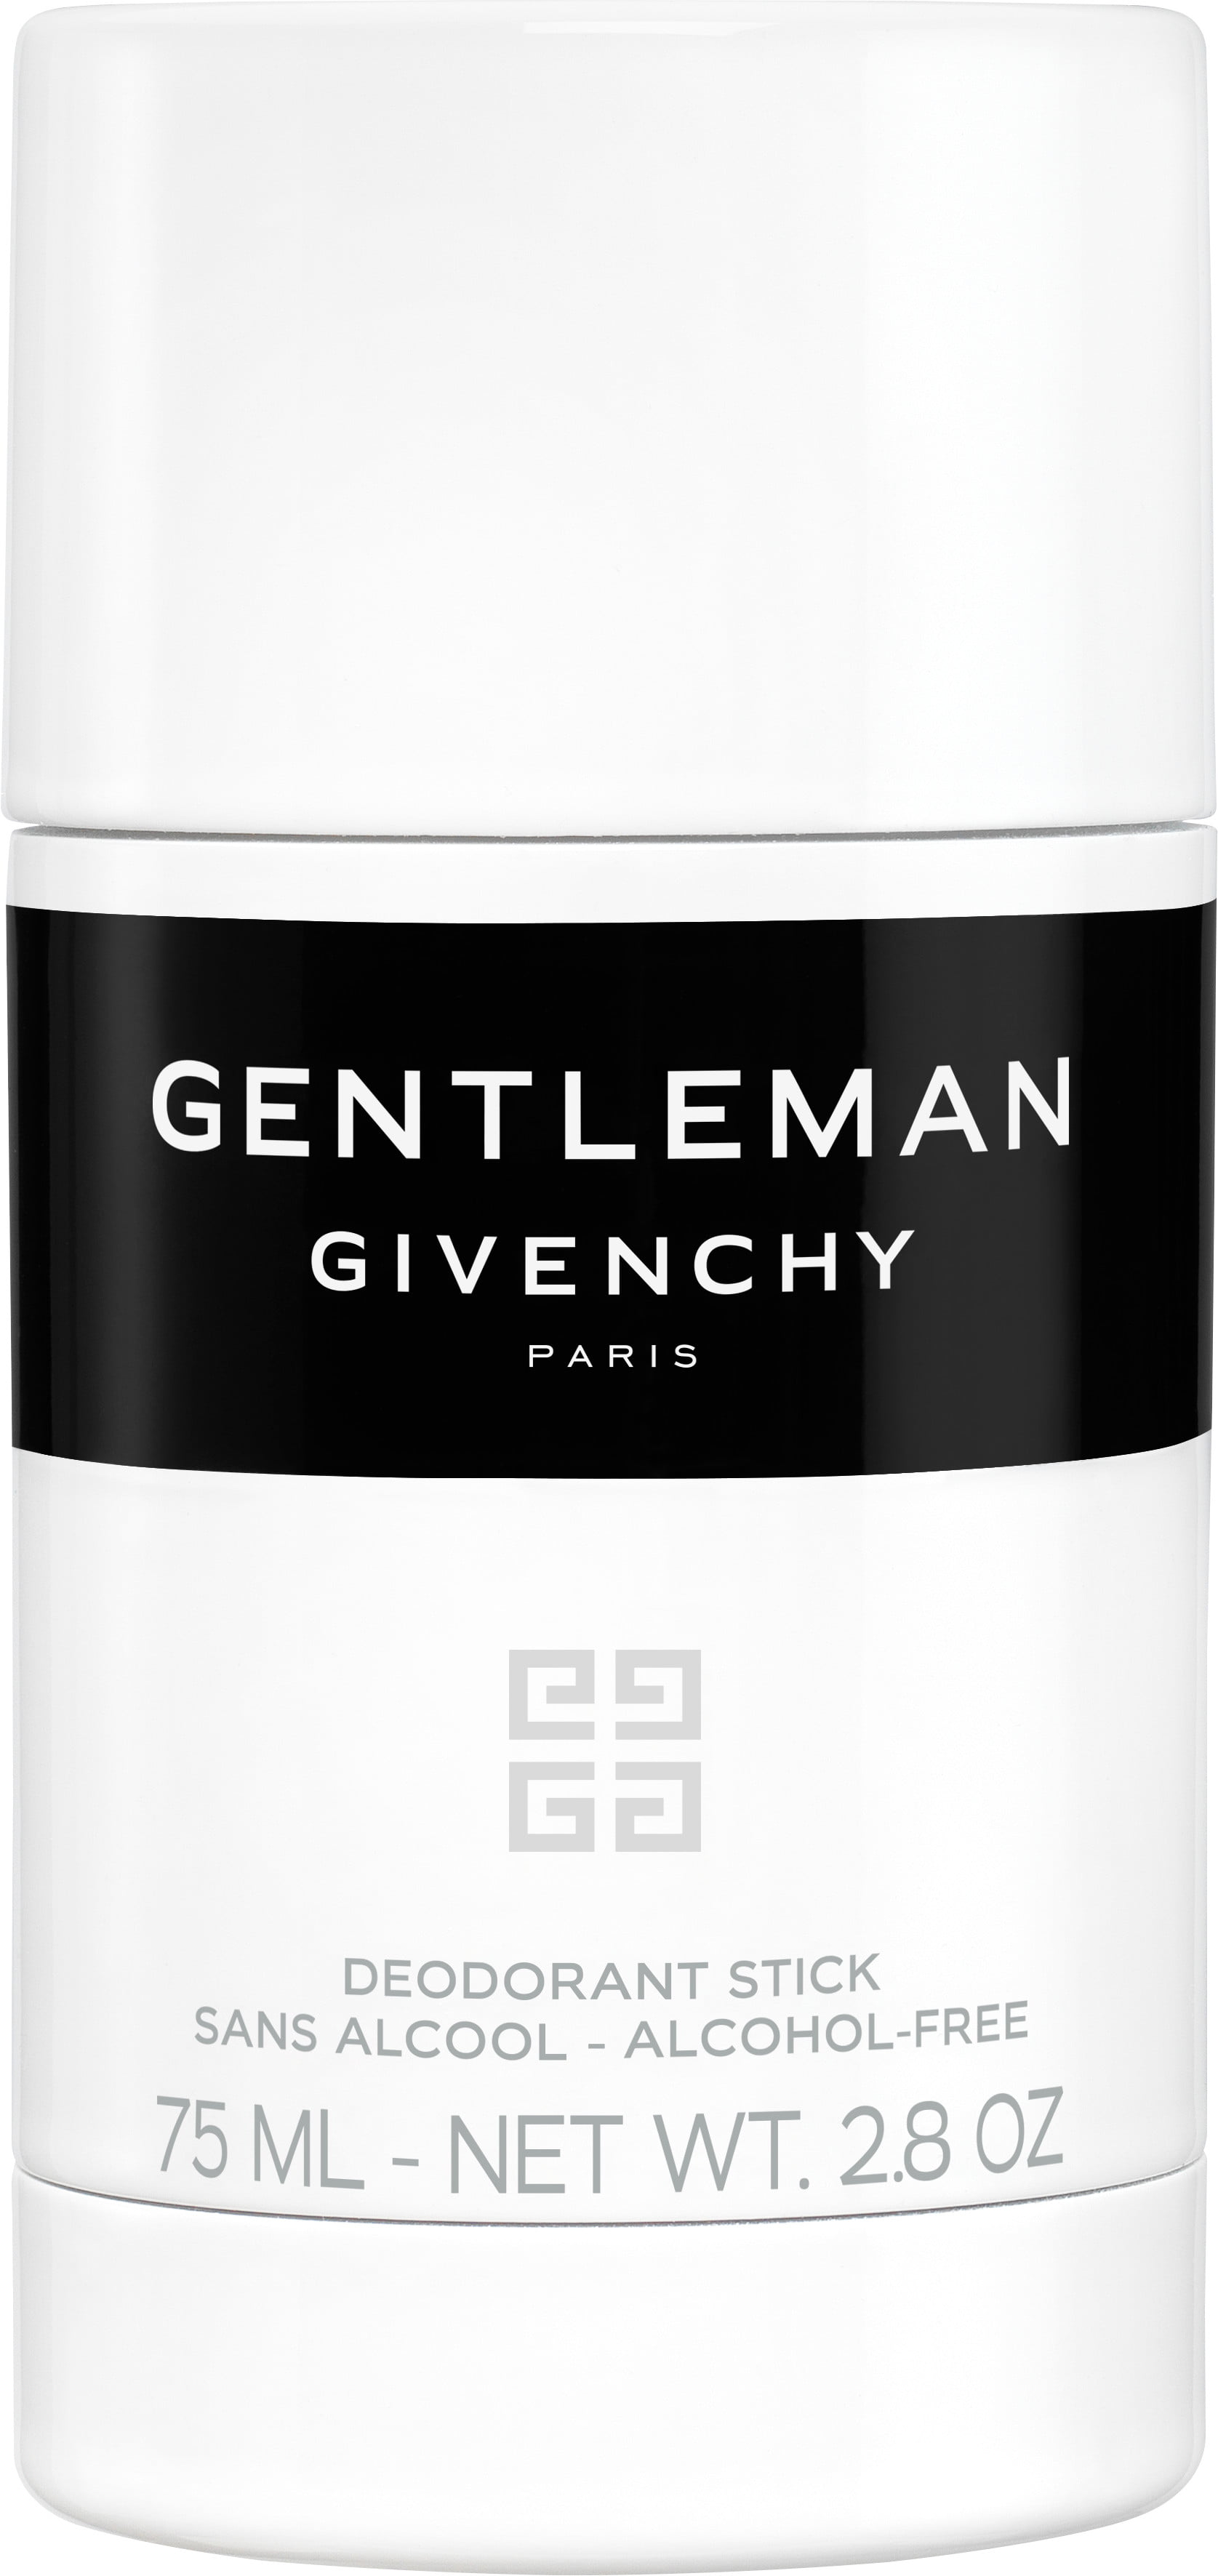 Стики для тела. Givenchy Gentleman дезодорант мужской. Givenchy Gentleman Deodorant Spray дезодорант-спрей для мужчин 150ml. Дезодорант стик Givenchy Gentleman. Givenchy · Gentleman парфюмерный дезодорант, 150 мл парфюмированный дезодо.